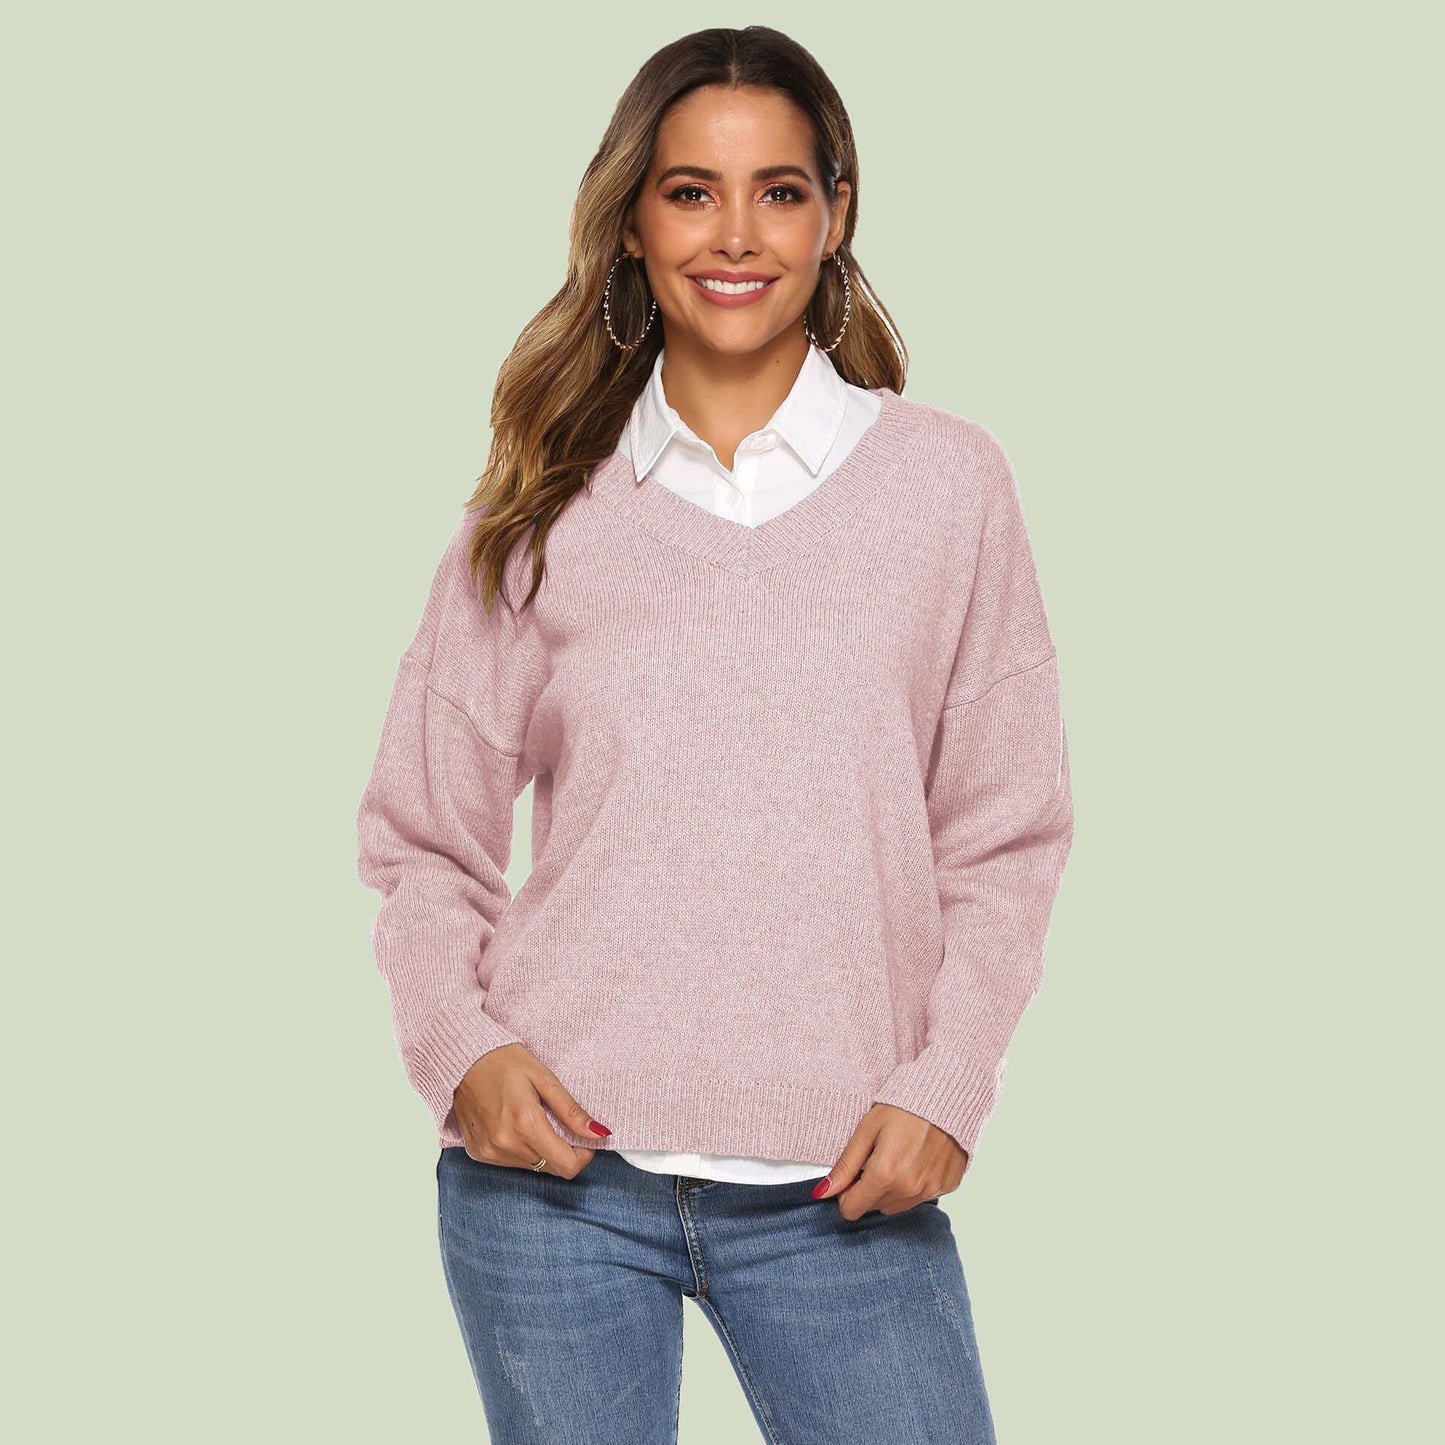 Callie - Stilig genser i mange farger